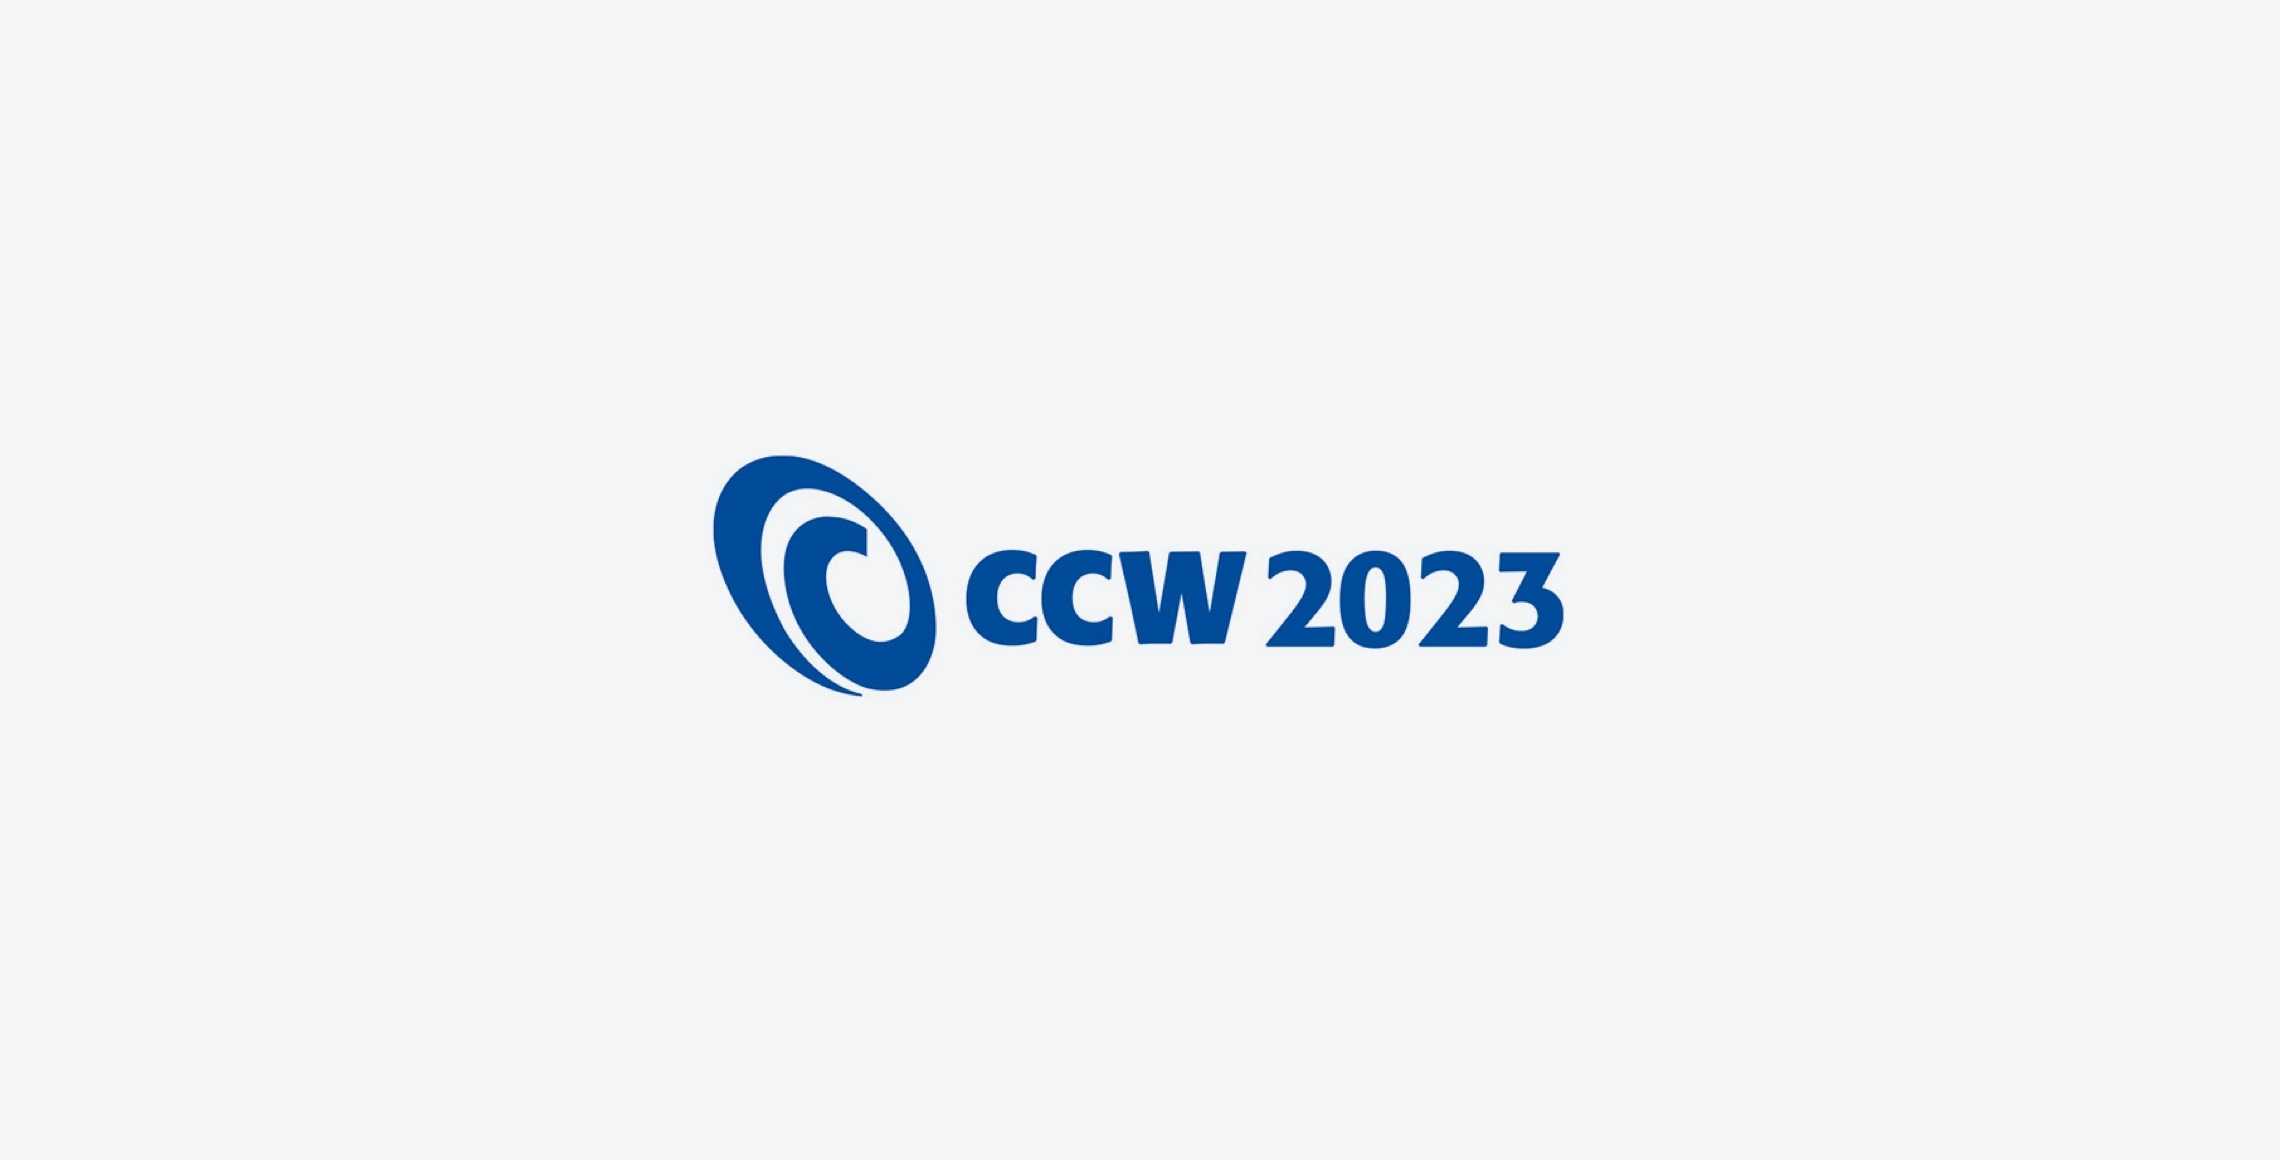 Ccw Berlin 2023 Event